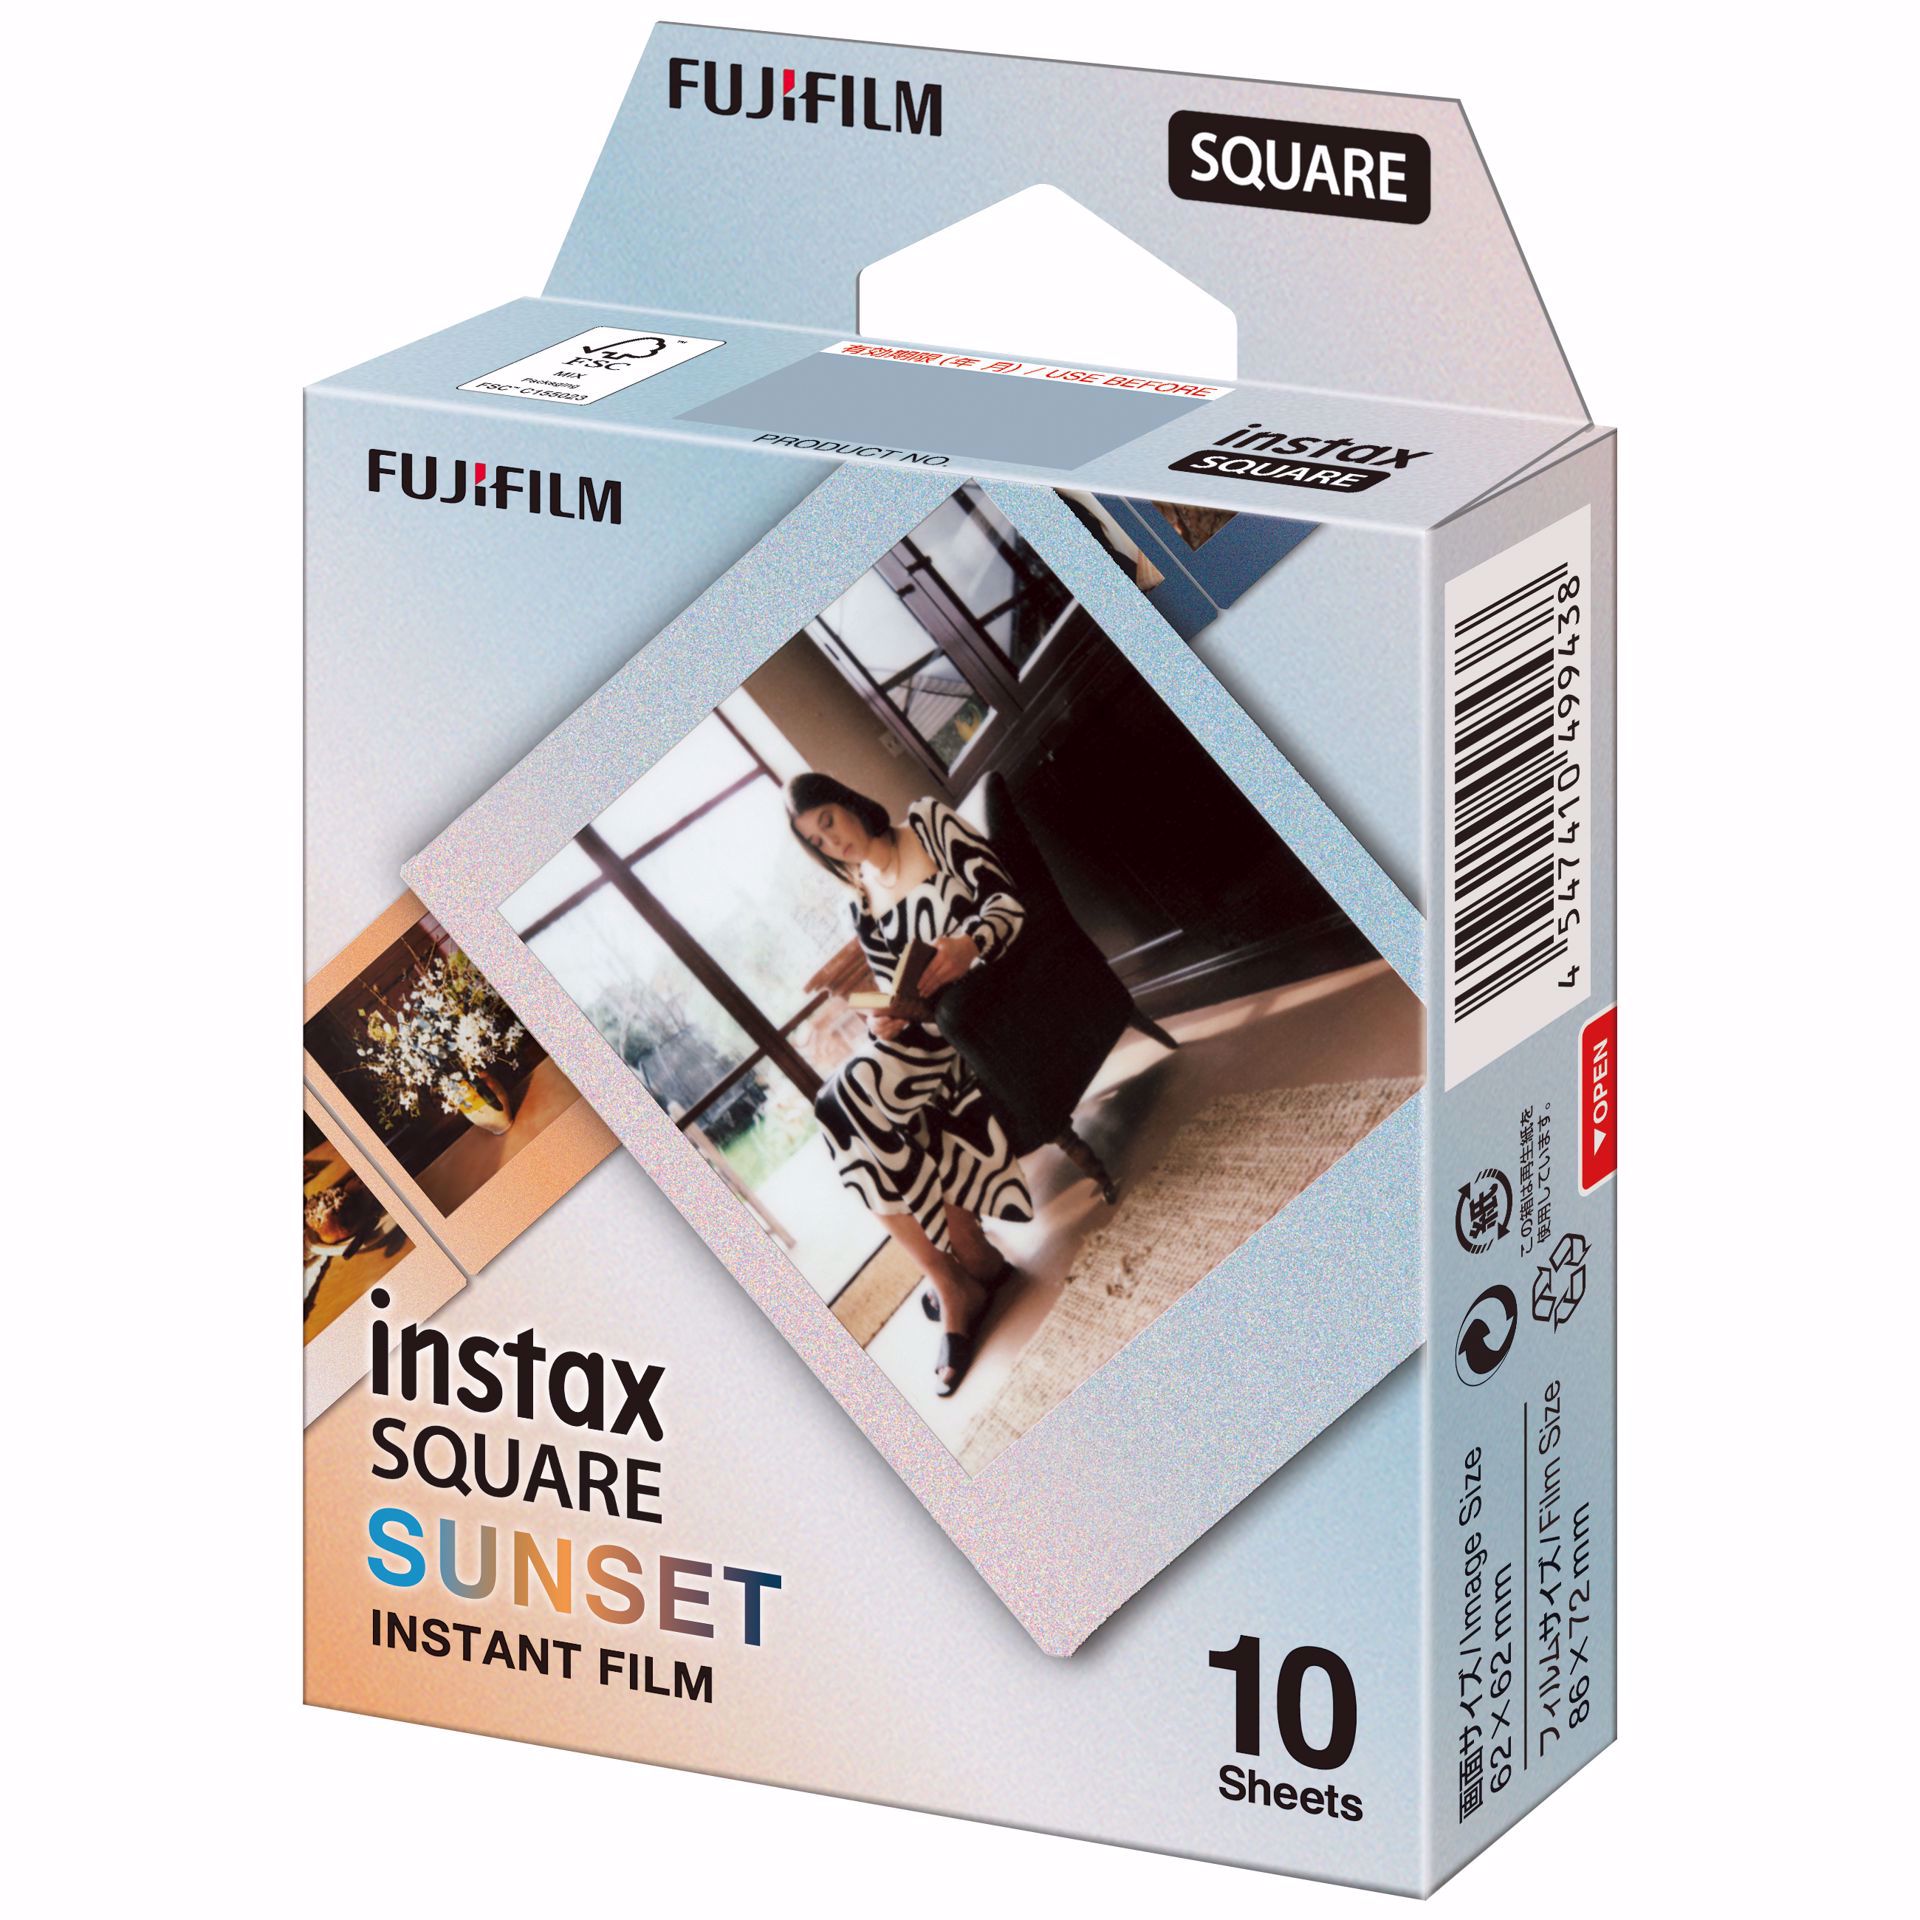 Fujifilm Instax Square Film Sunset 10 bilder, fargefilm til Fuji SQ